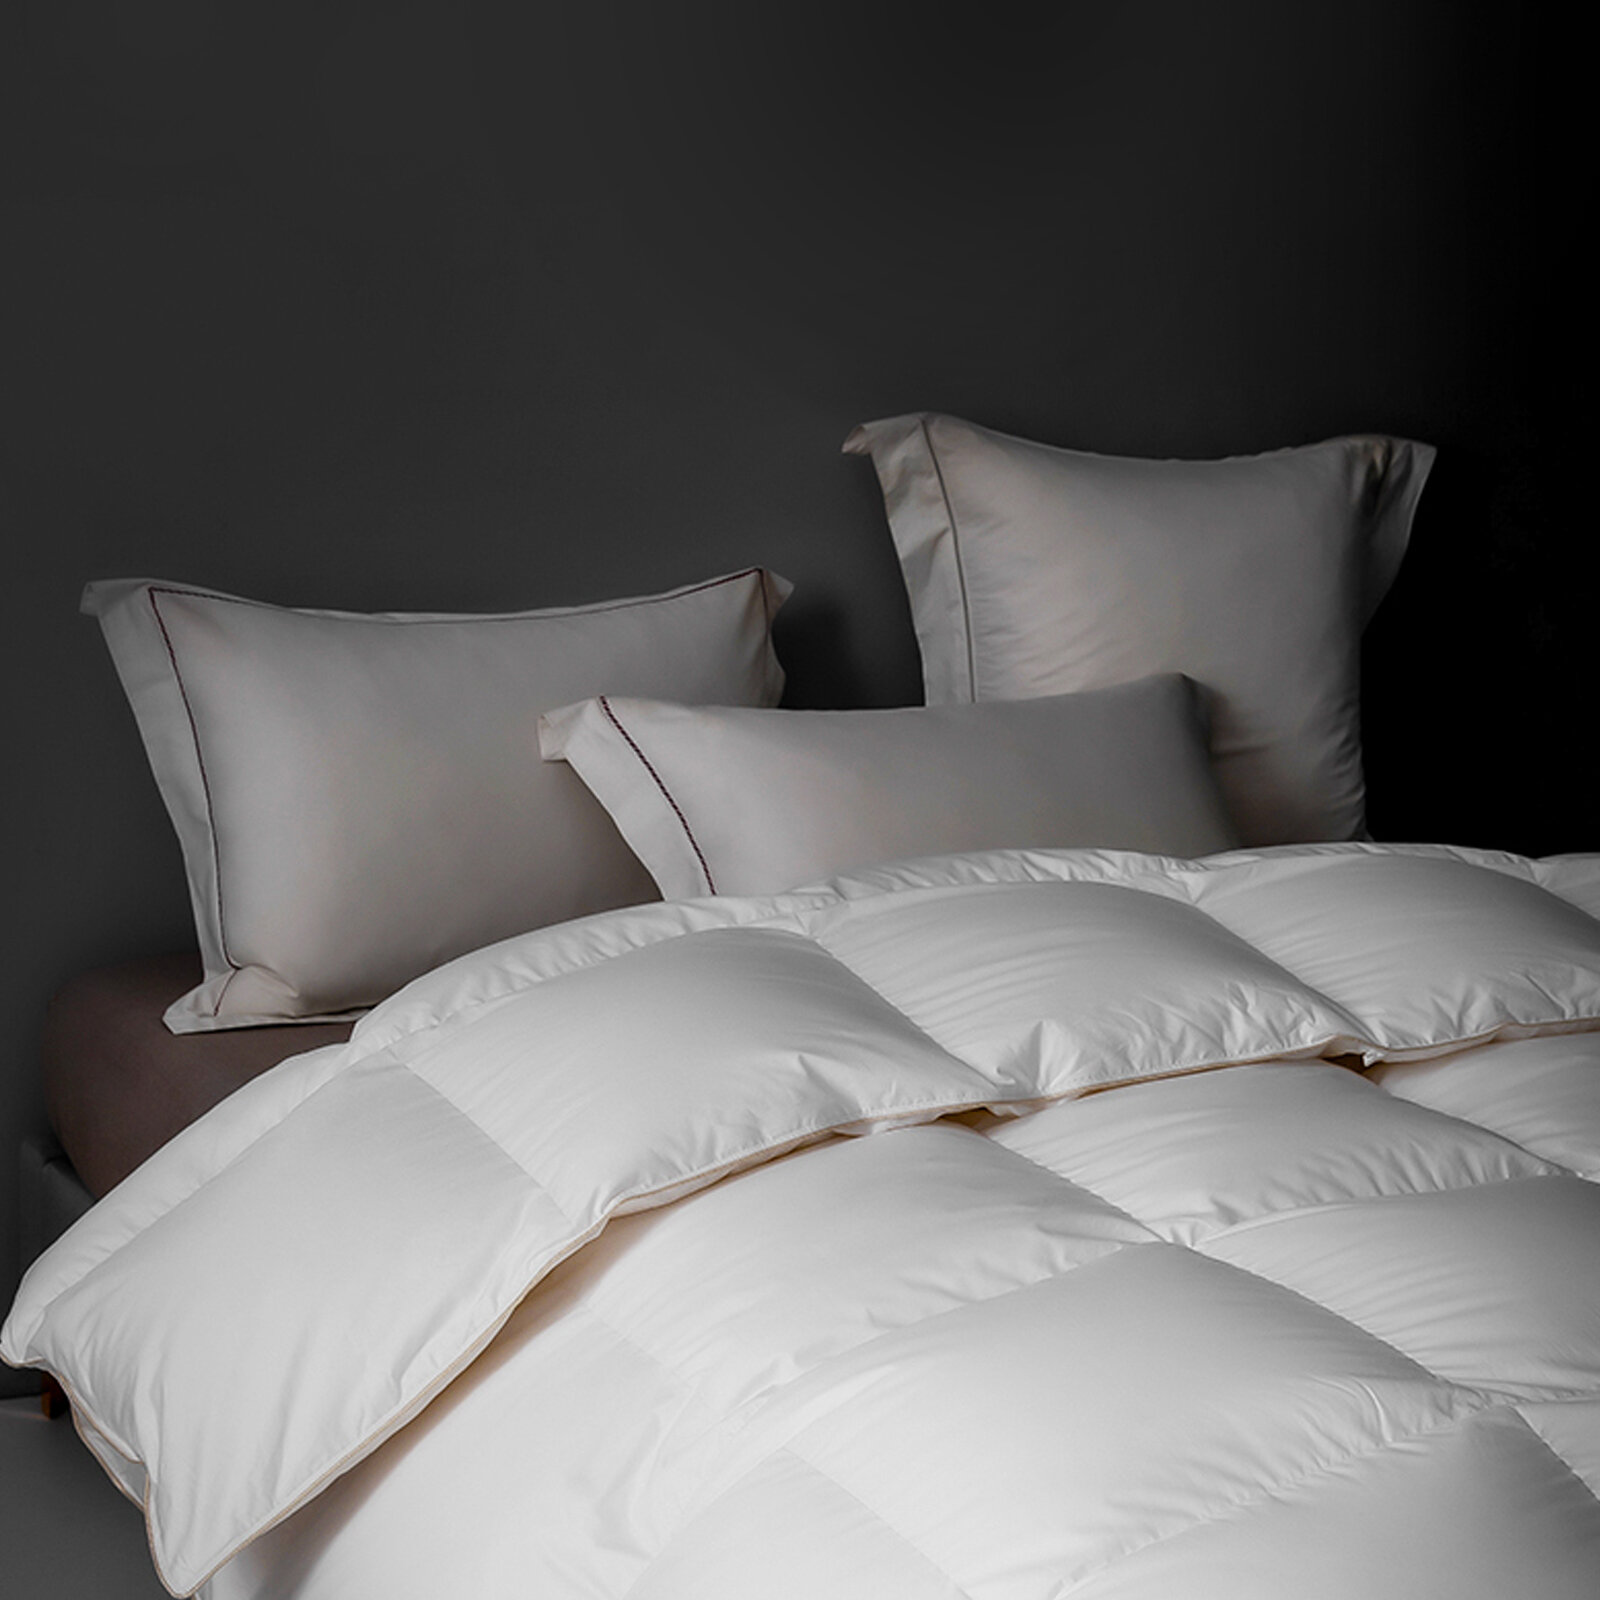 2 Packs Premium 75% White Duck Down Bed Pillows 600 Fill Power OEKO RDS US 